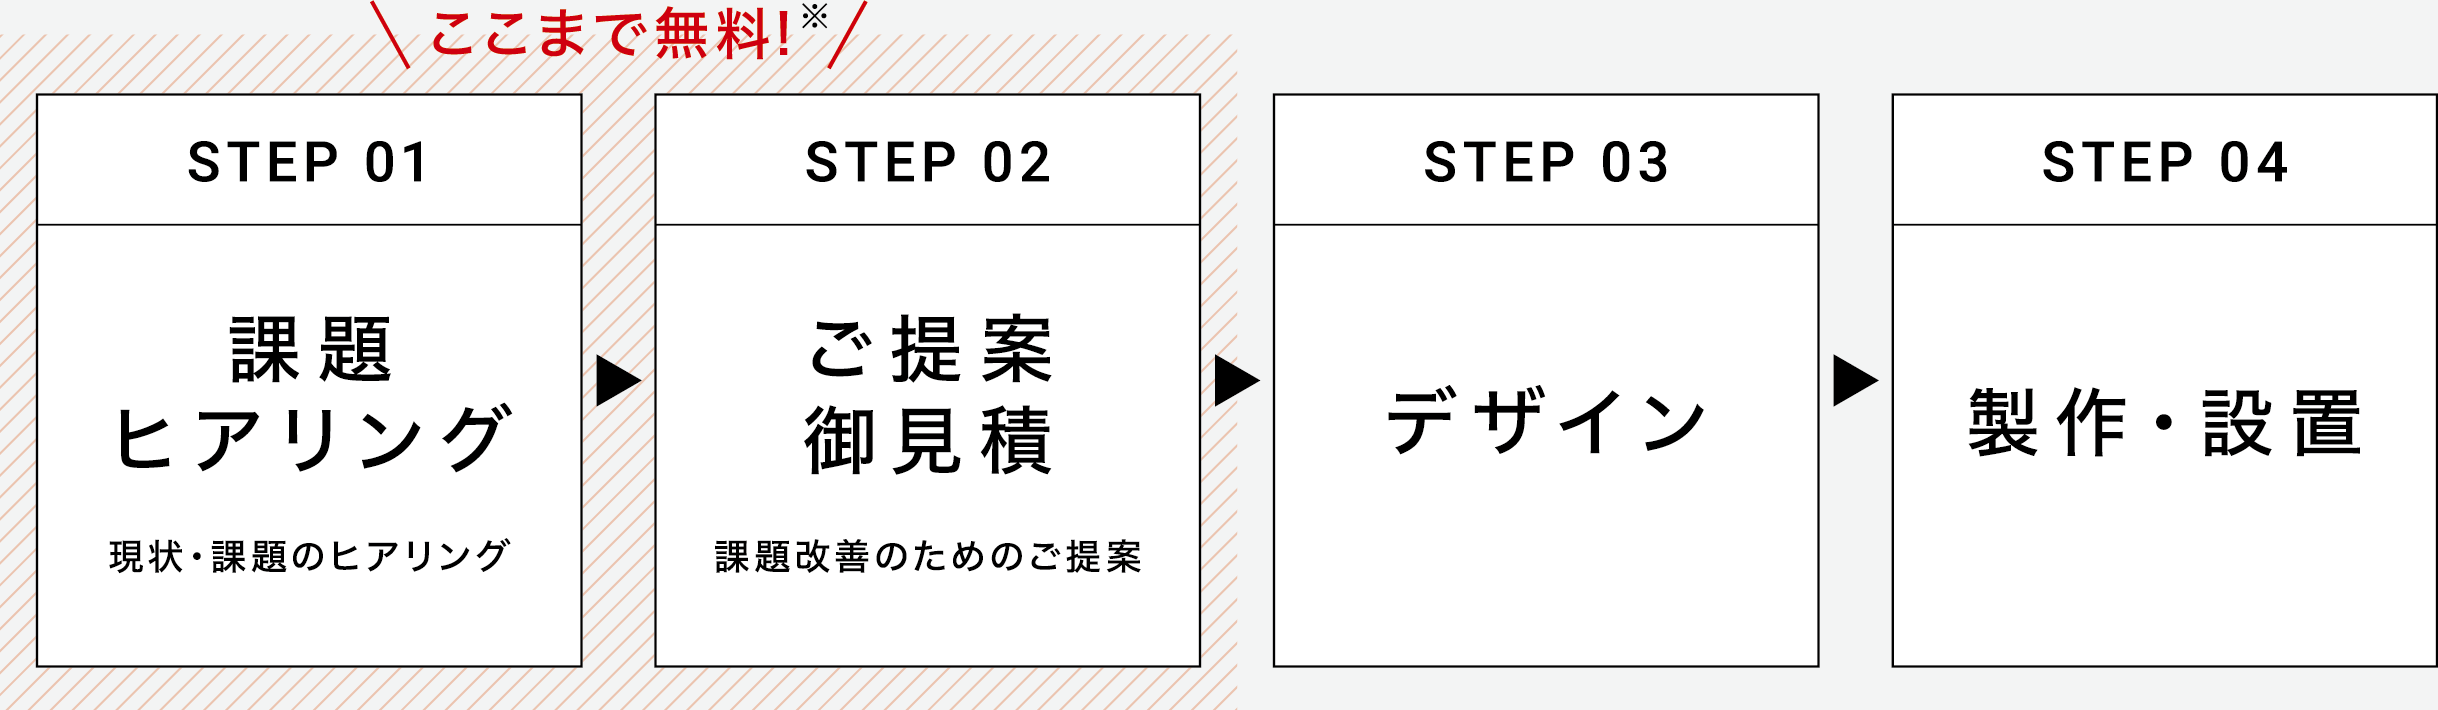 STEP 01 課題ヒアリング ／ STEP 02 ご提案御見積 ／ STEP 03 デザイン ／ STEP 04 製作・設置